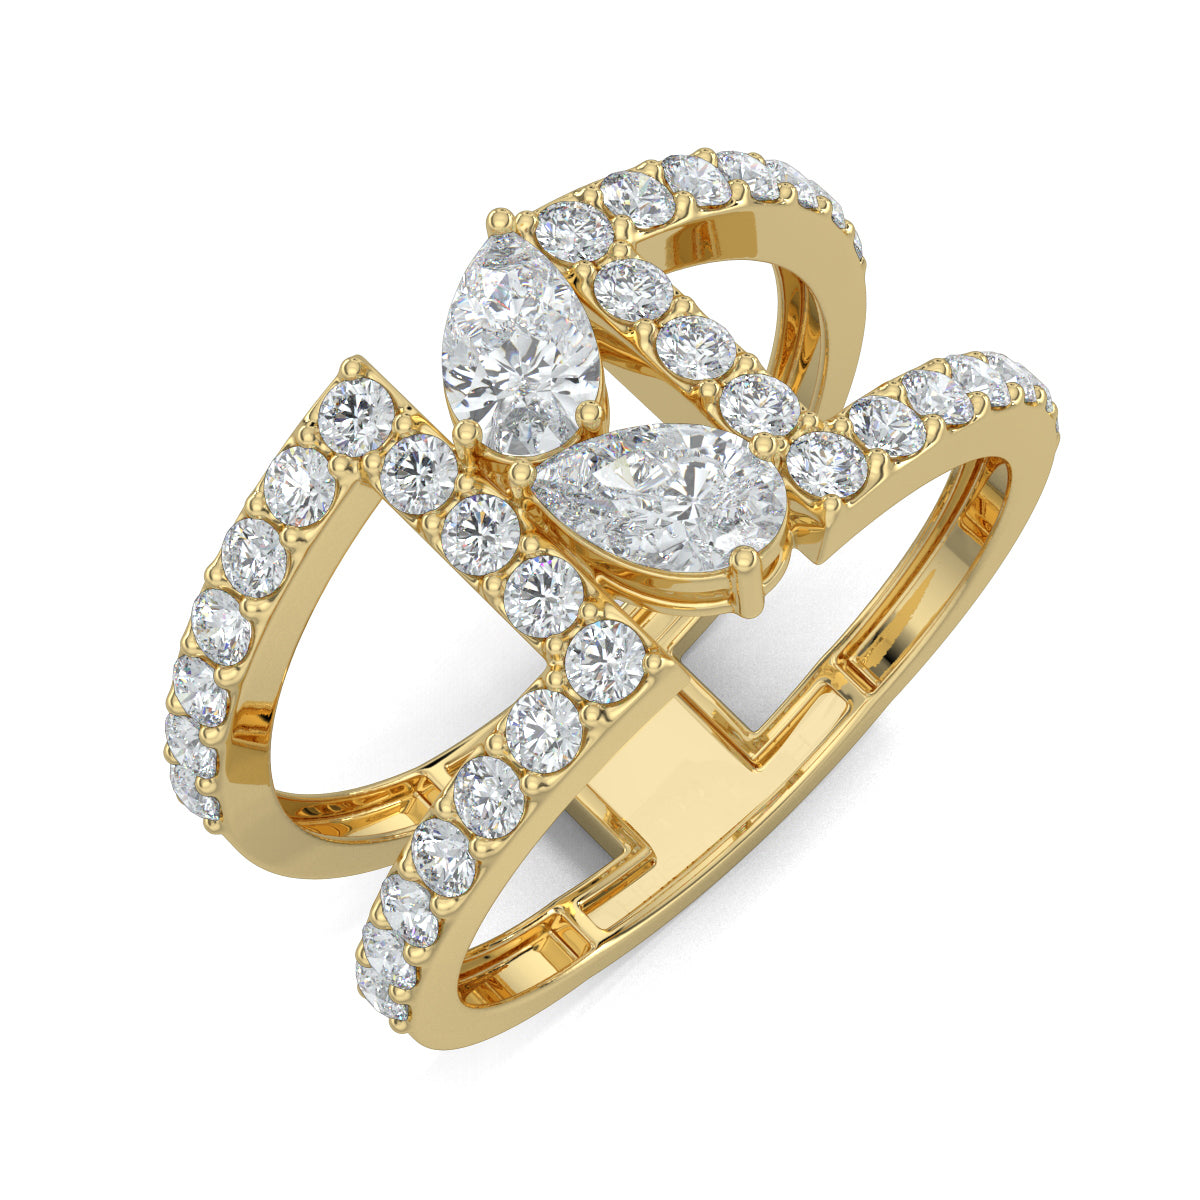 Yellow Gold, Diamond Ring, Natural diamond duet ring, Lab-grown diamond duet ring, everyday diamond band, pave set diamond stack ring, pear diamond accent, elegant jewelry accessory